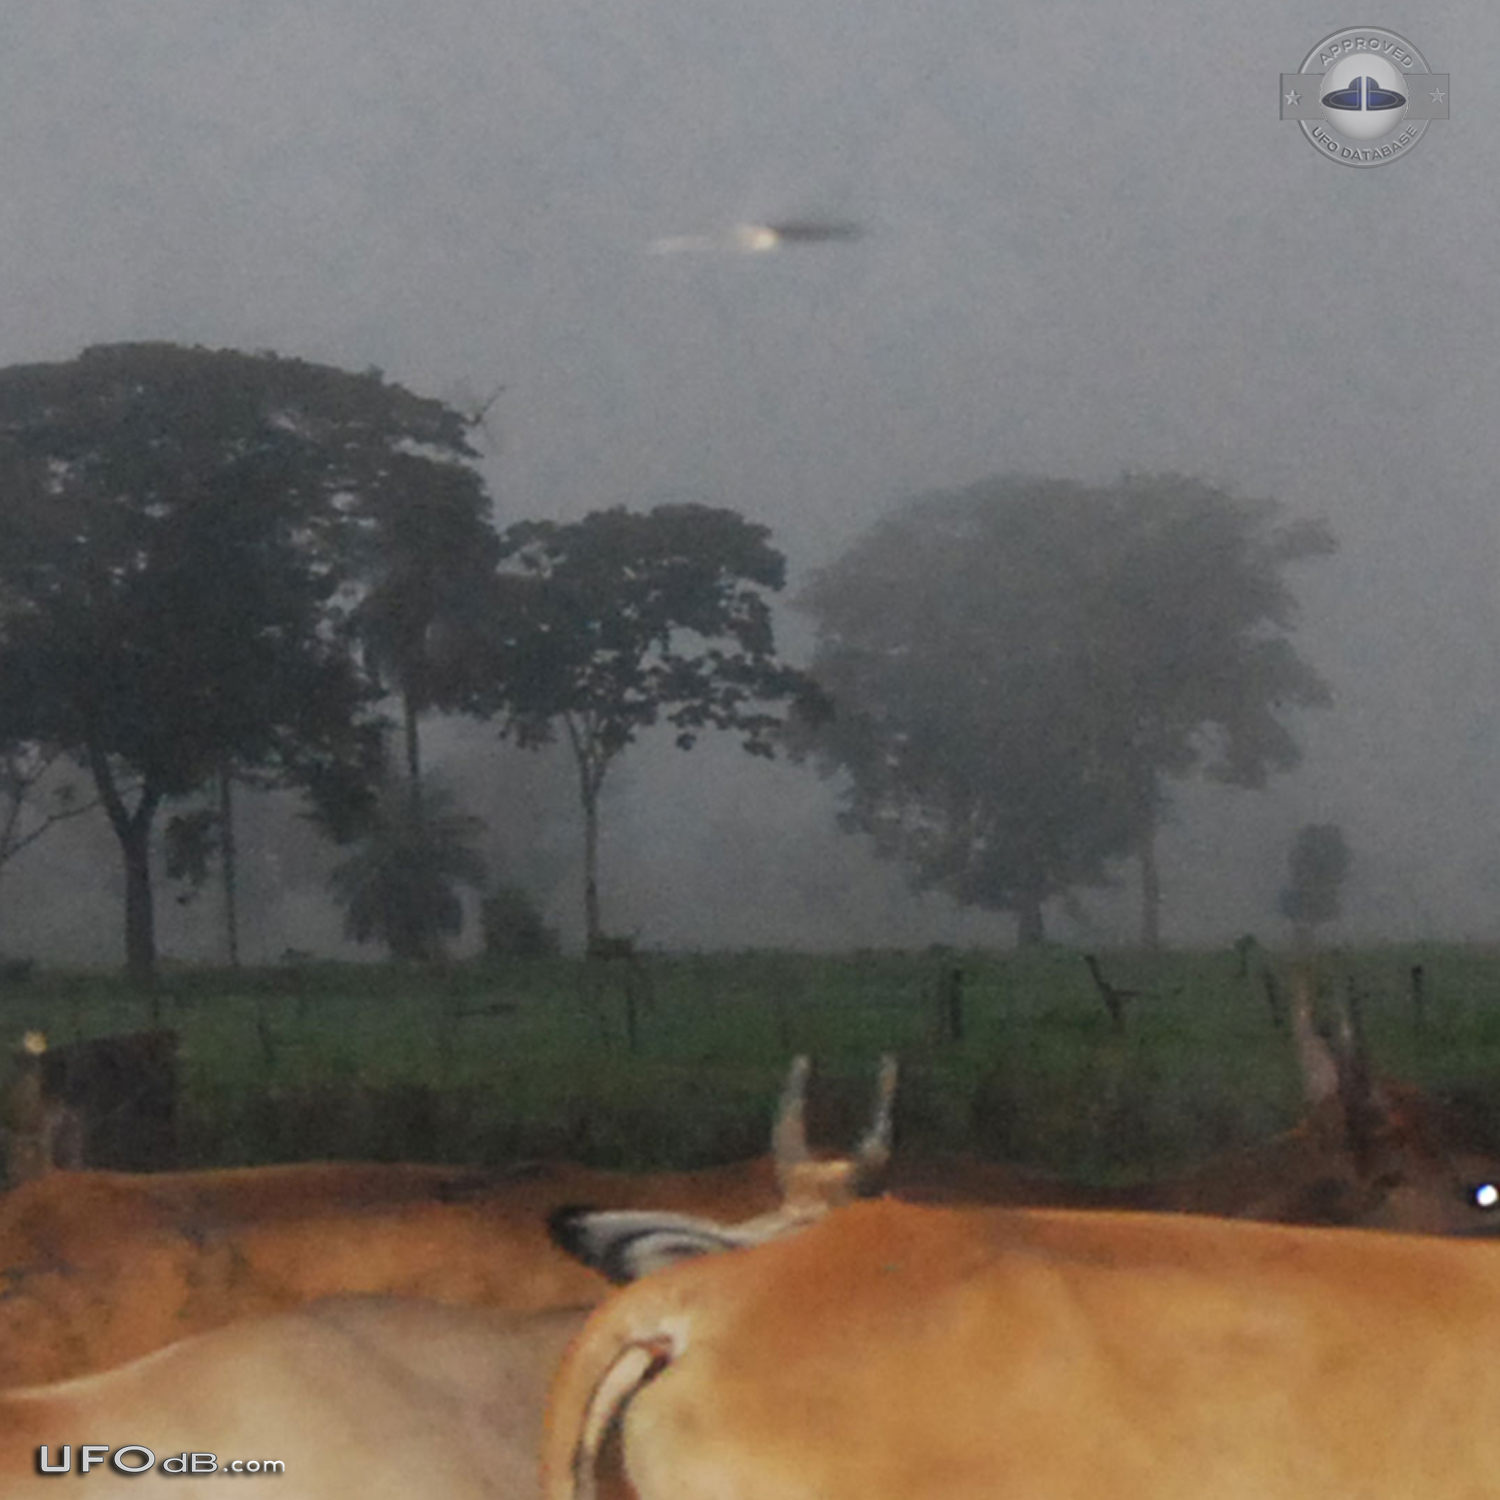 Cattle farm picture reveals passing saucer UFO in Portugesa, Venezuela UFO Picture #484-2